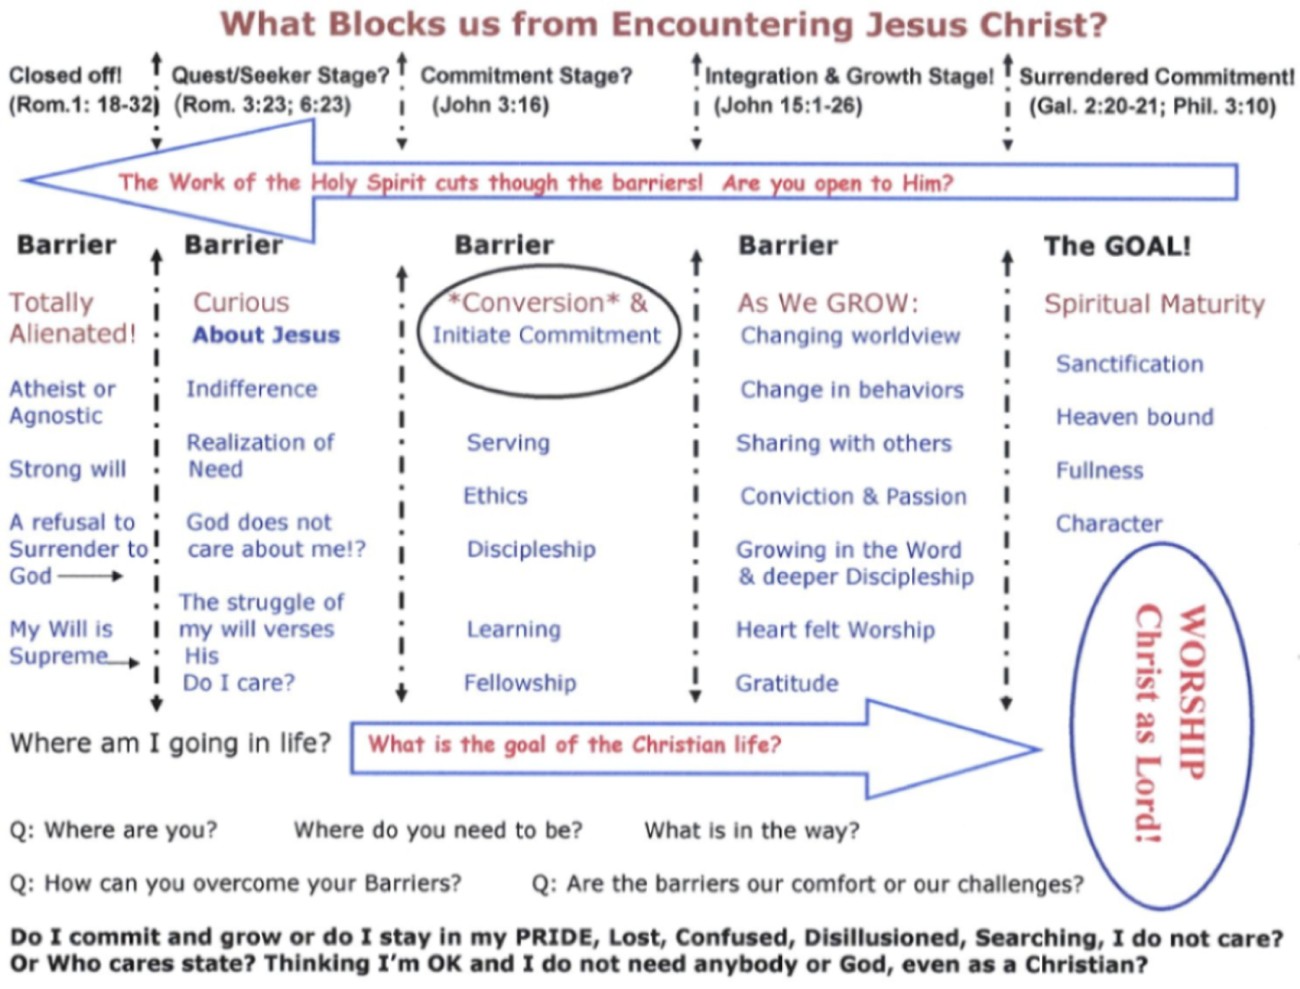 Discipleship Vs Evangelism Chart